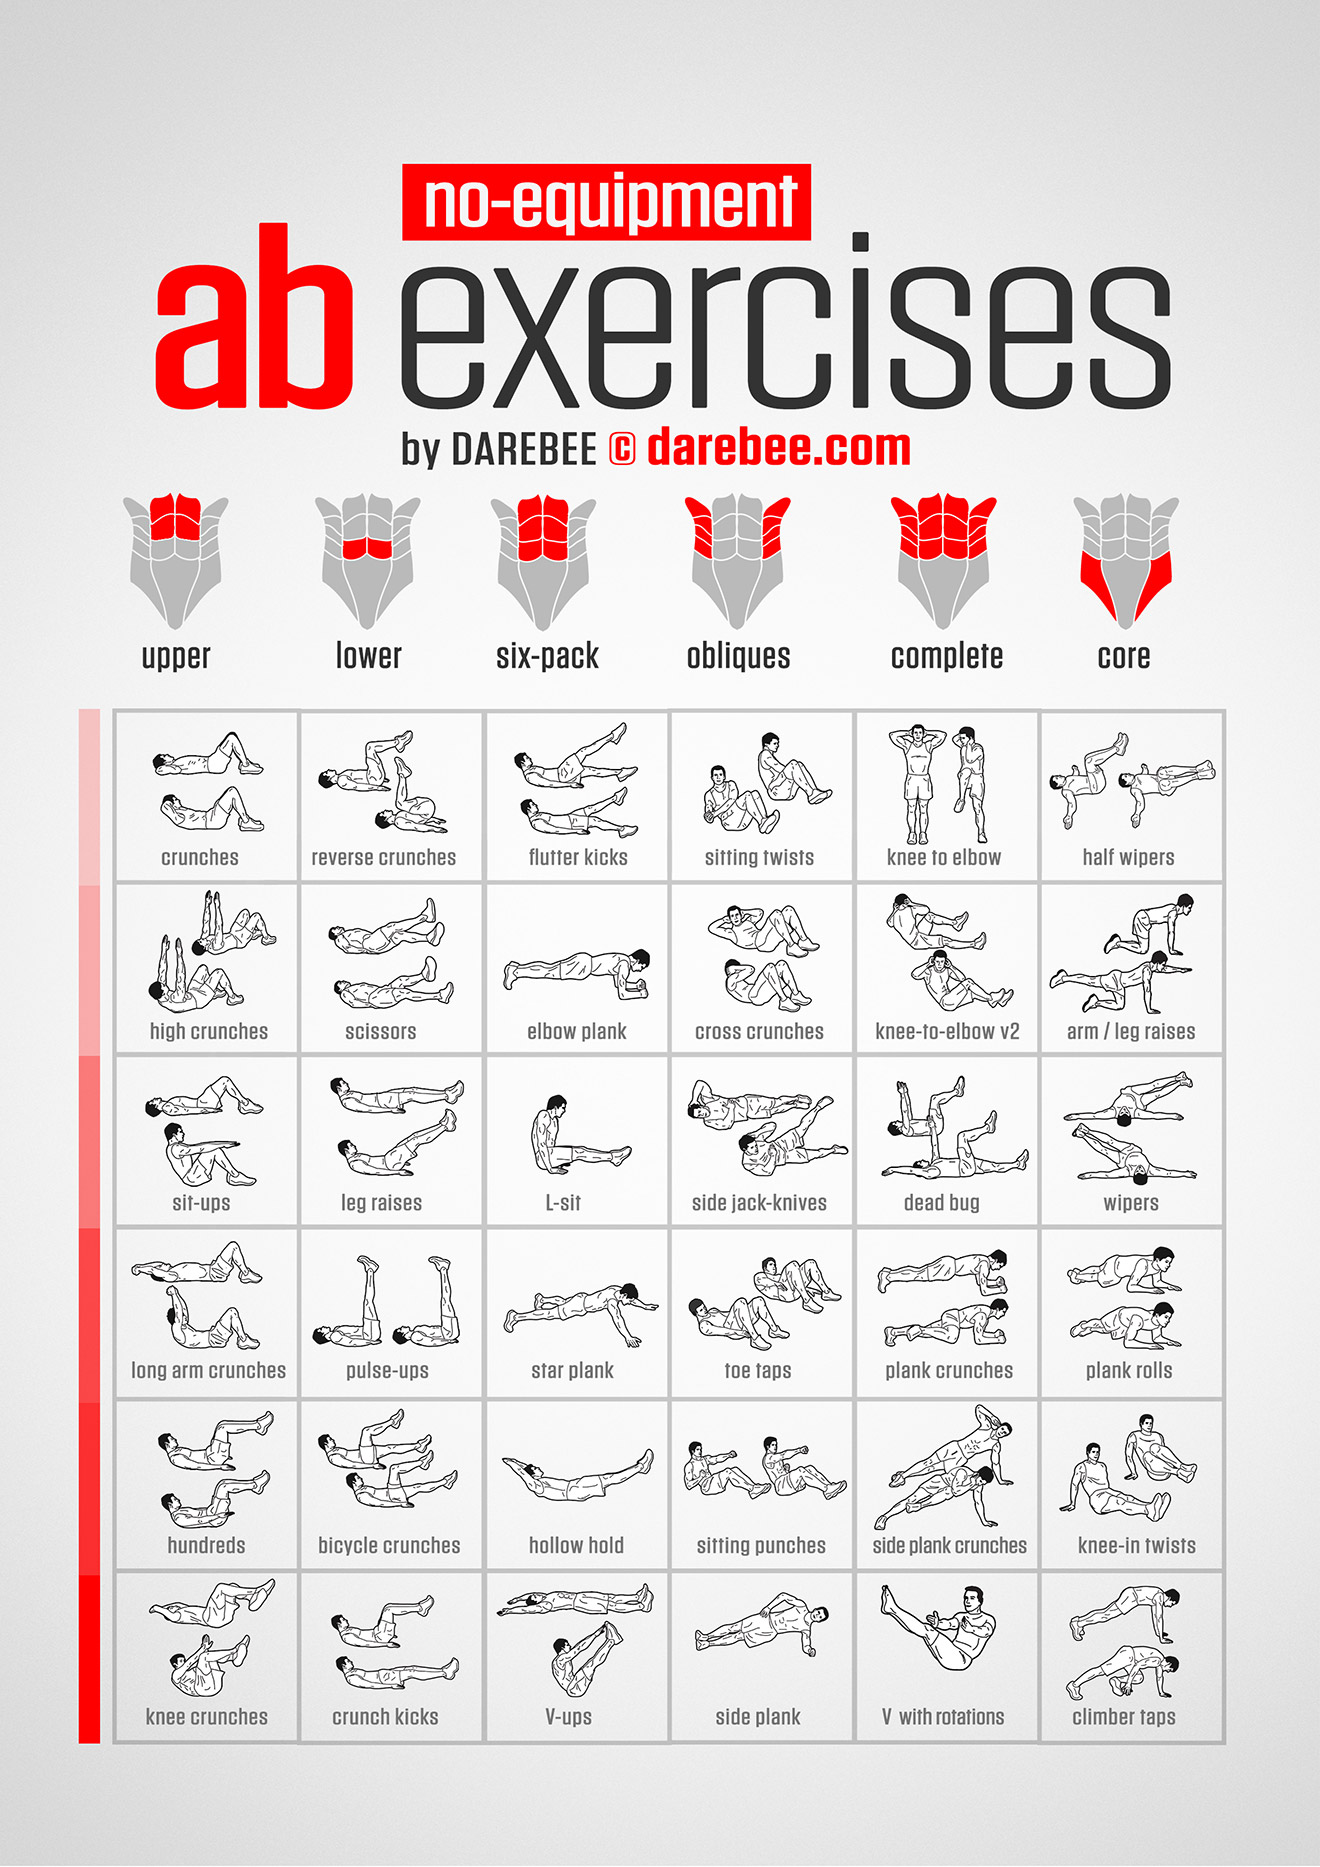 https://darebee.com/images/guides/ab-exercises-chart.jpg